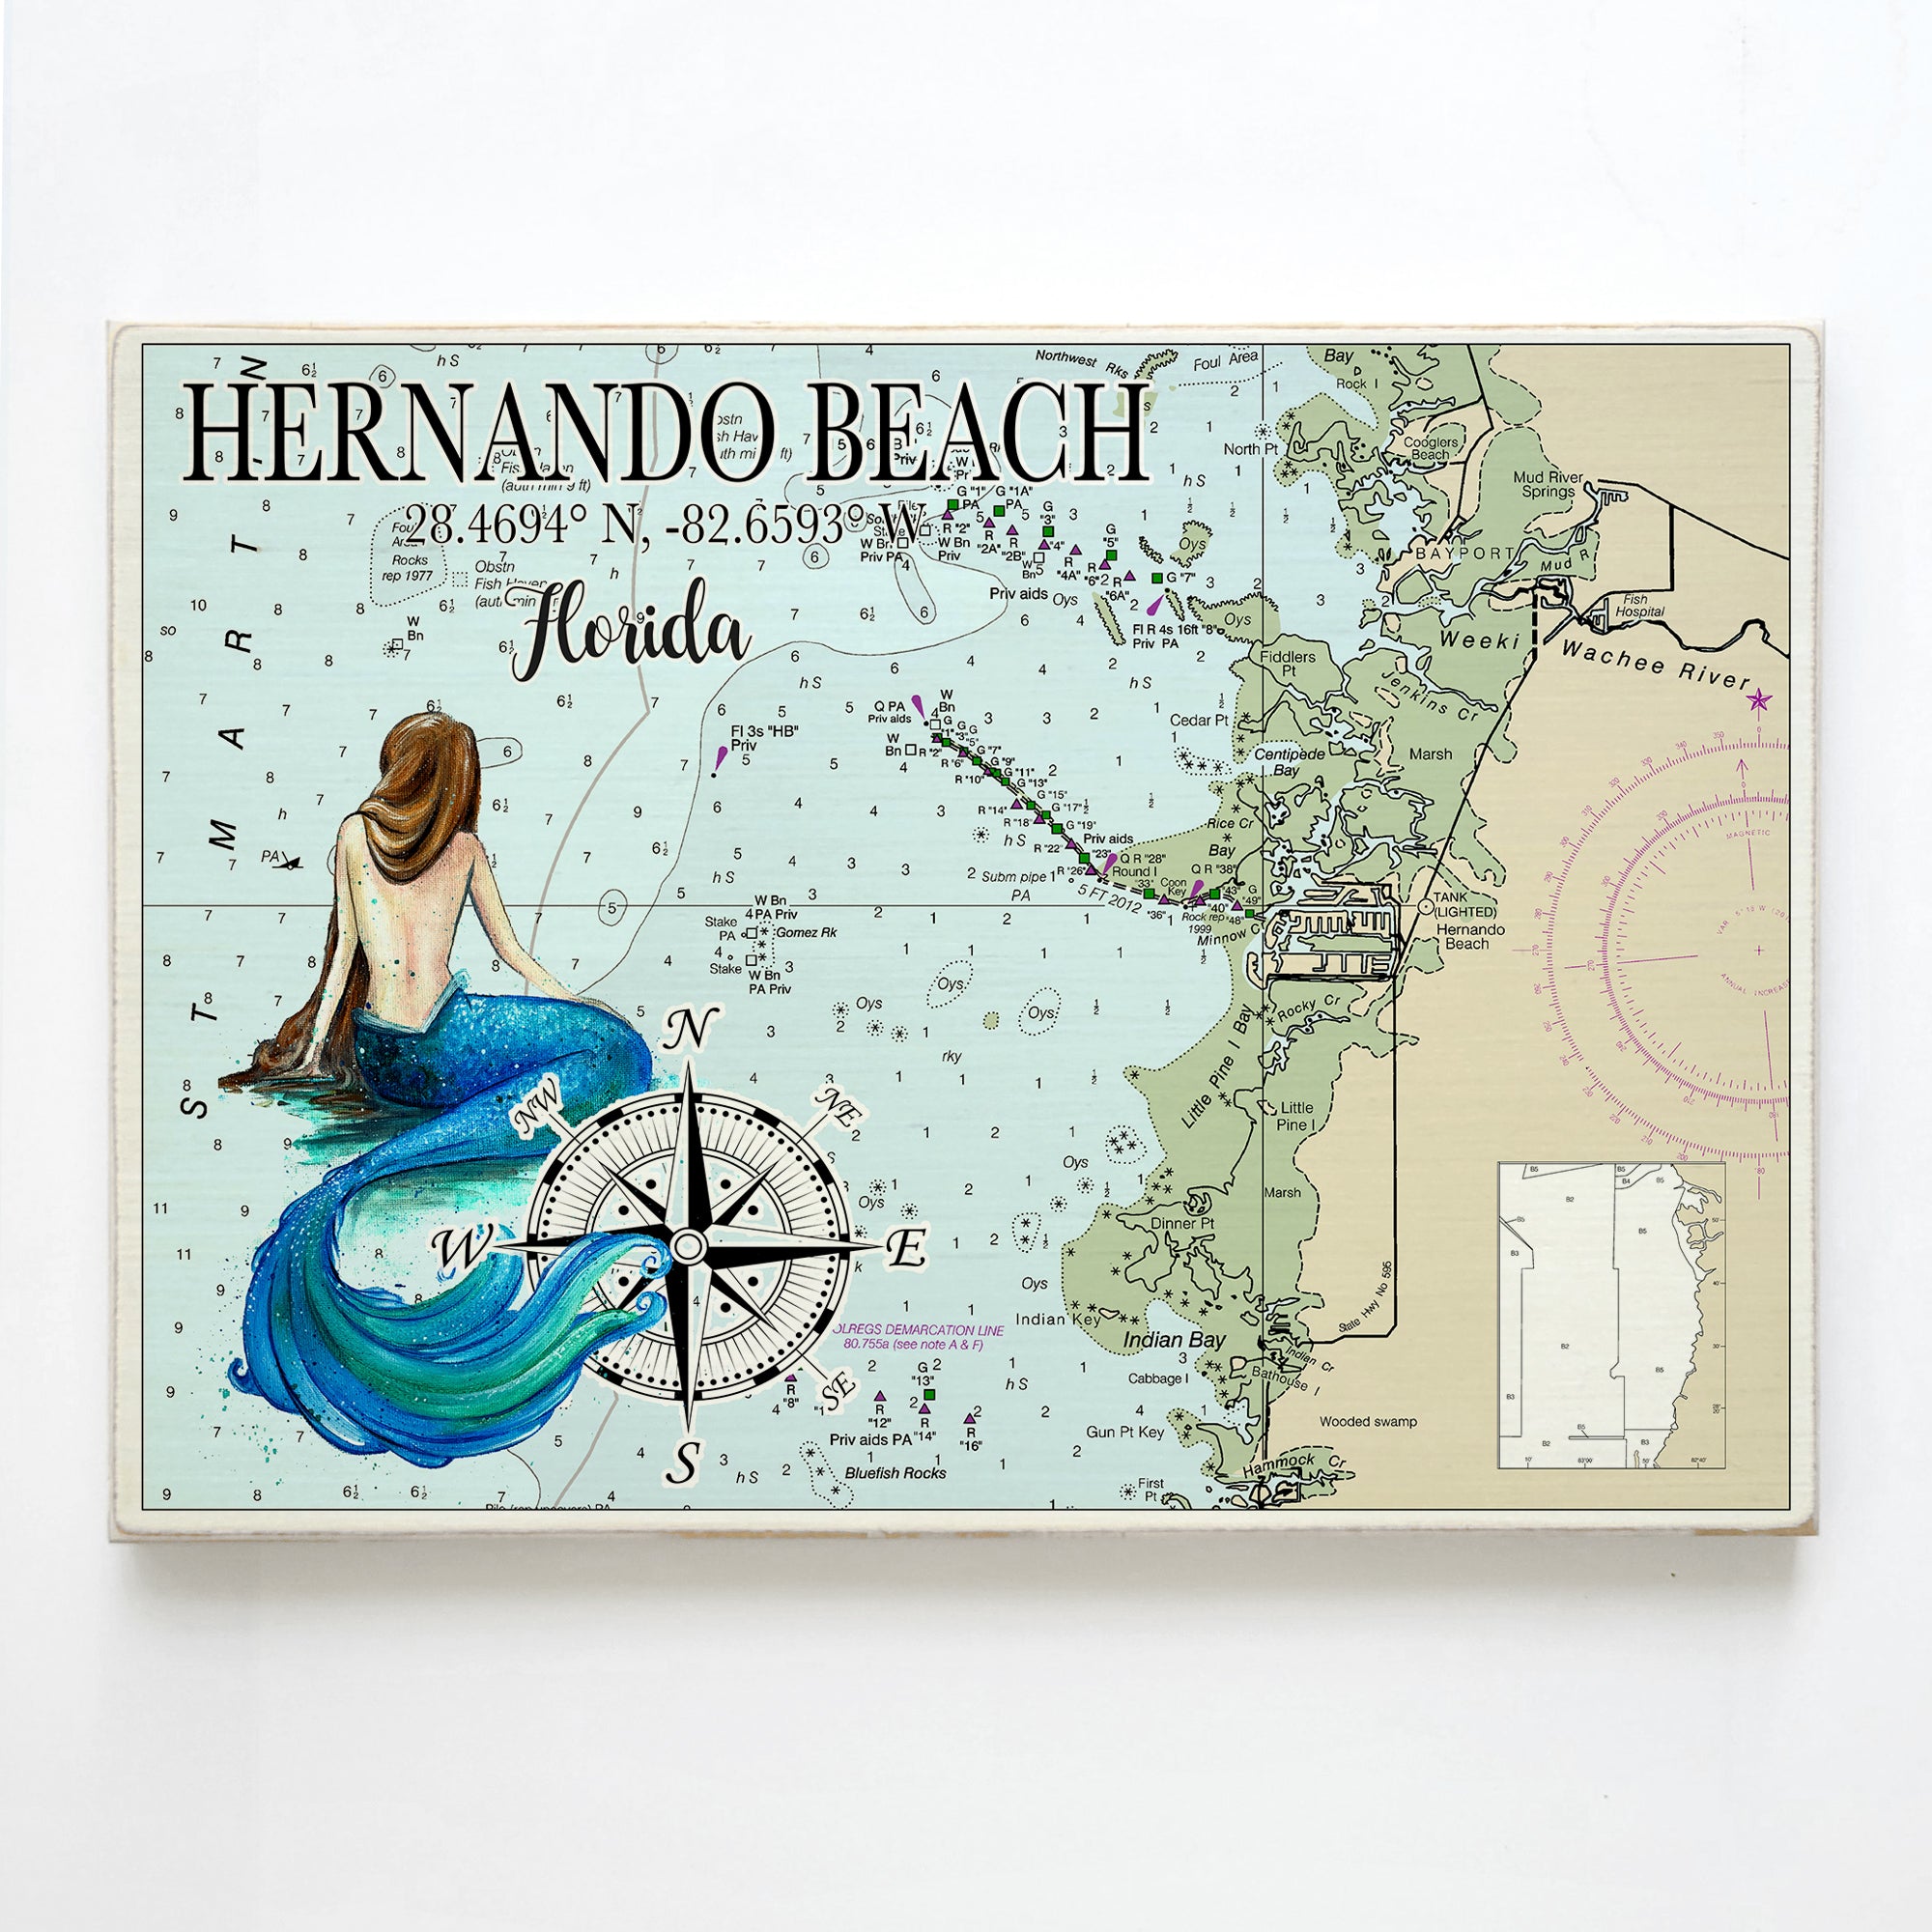 Hernando Beach, FL Plank Map